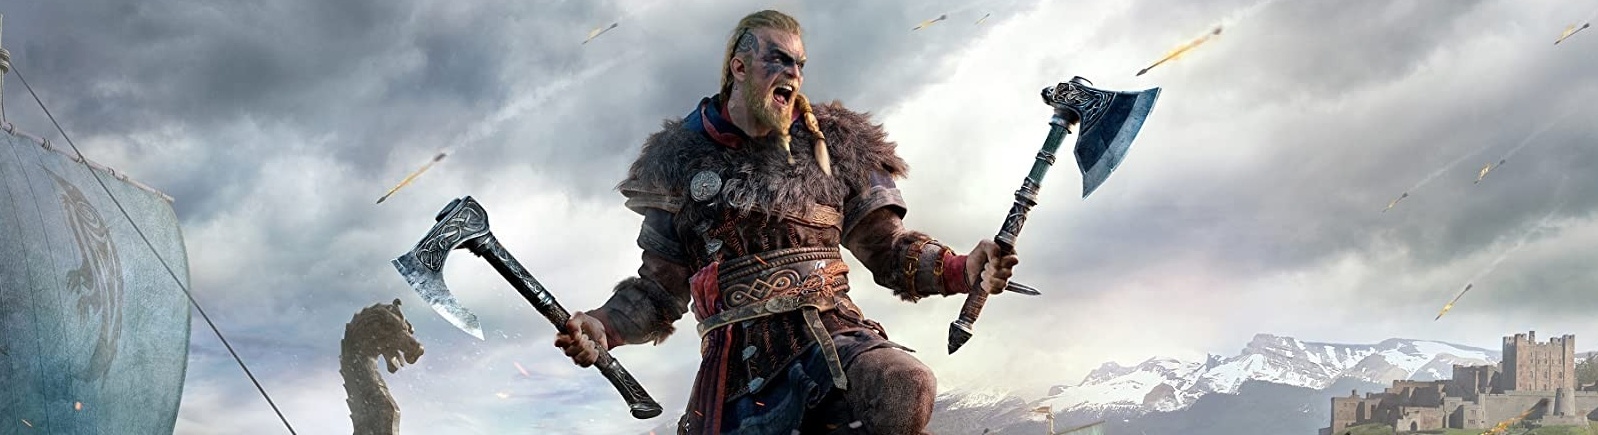 #викинги #vikings #Рагнар #Ragnar #bjorn #бьерн #цитаты | ВИКИНГИ ВАЛЬХАЛЛА | ВКонтакте